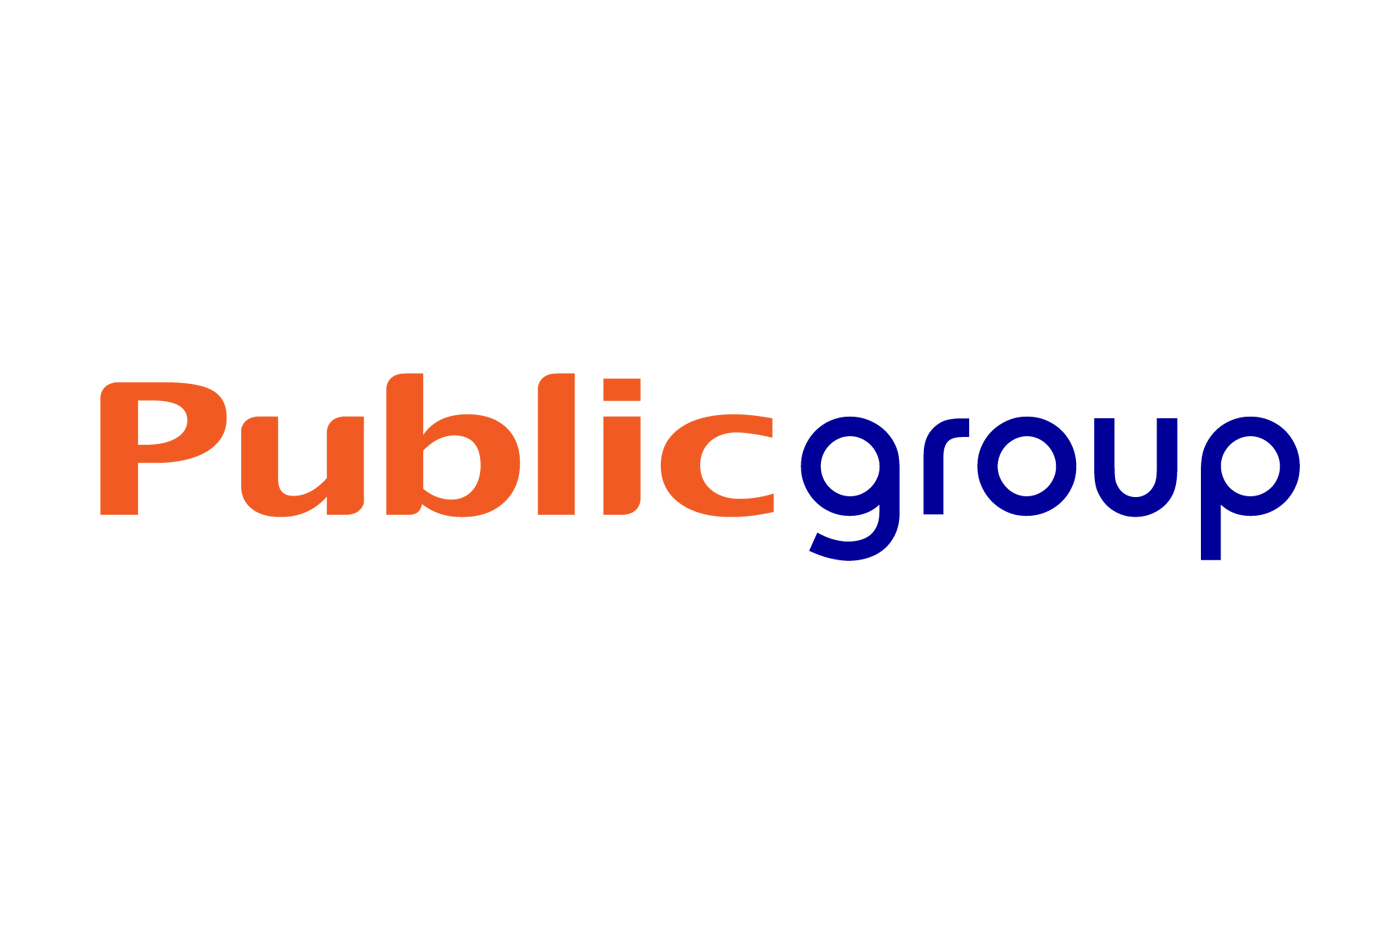 Public Group: Συνεχείς επενδύσεις σε υπηρεσίες που αναβαθμίζουν την εμπειρία των καταναλωτών